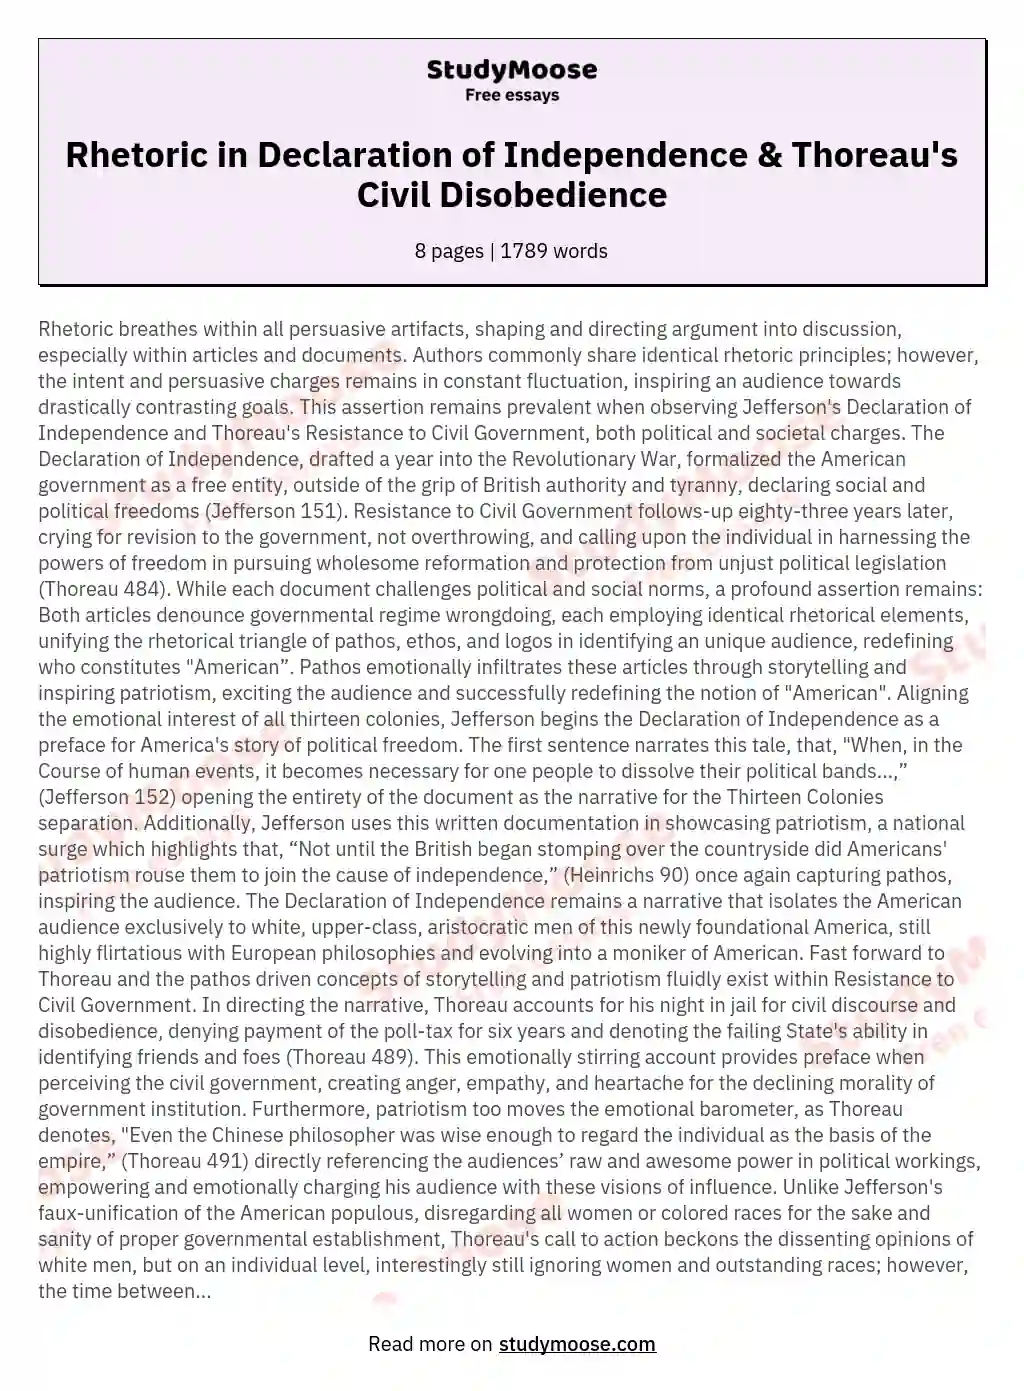 Rhetoric in Declaration of Independence & Thoreau's Civil Disobedience essay